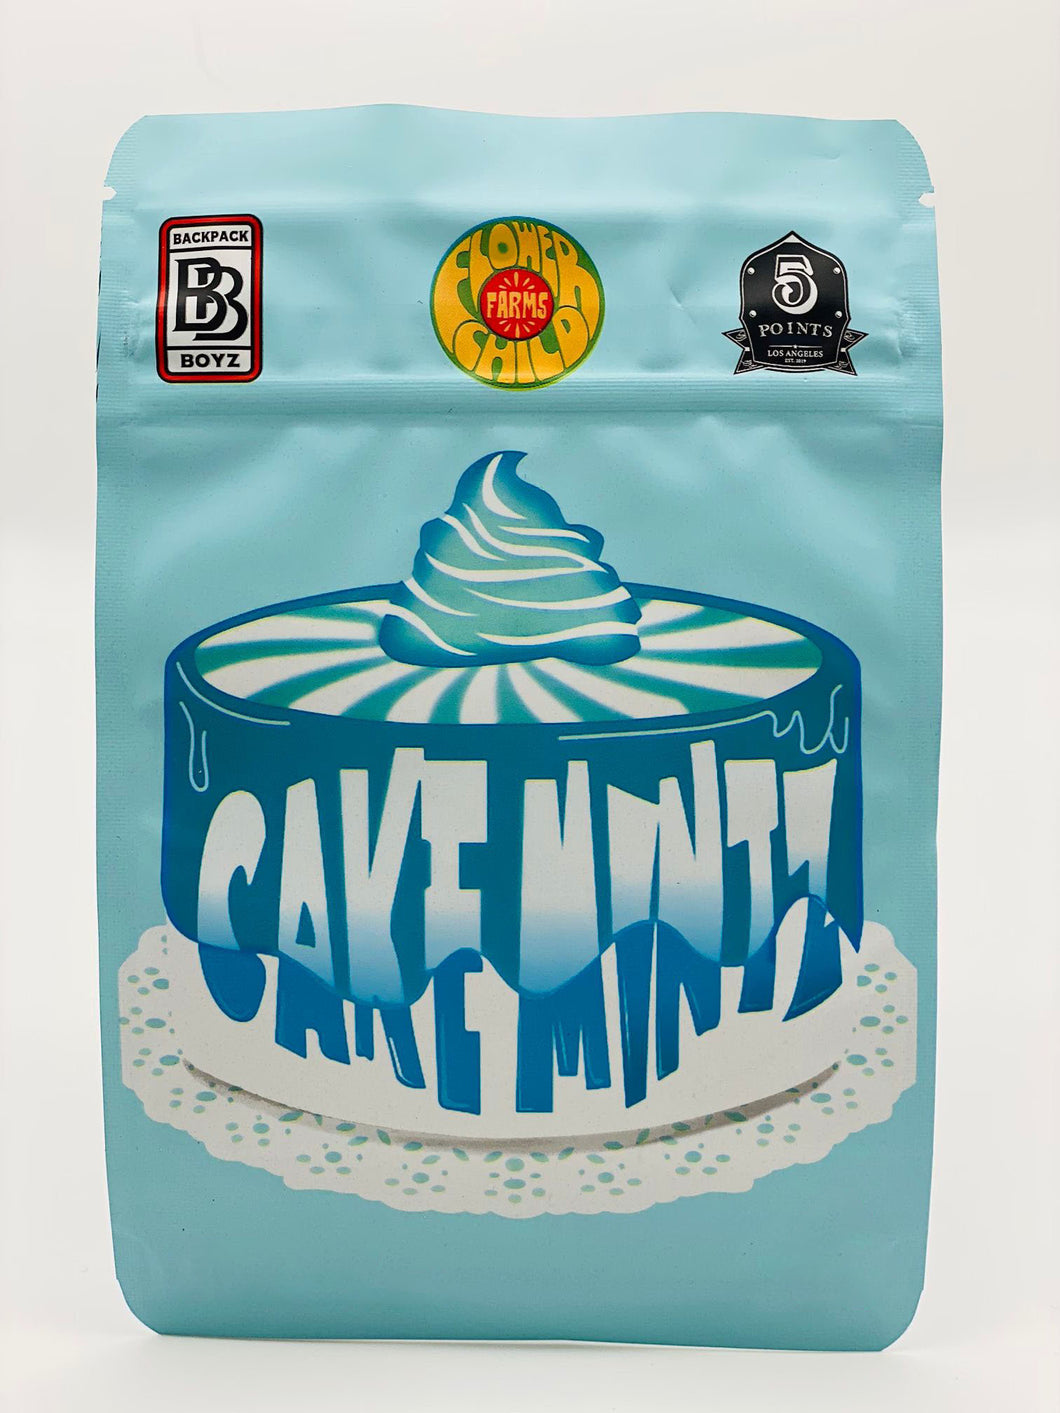 50 Bag Back Boyz Cake Mintz 3.5-gram empty Mylar bags.